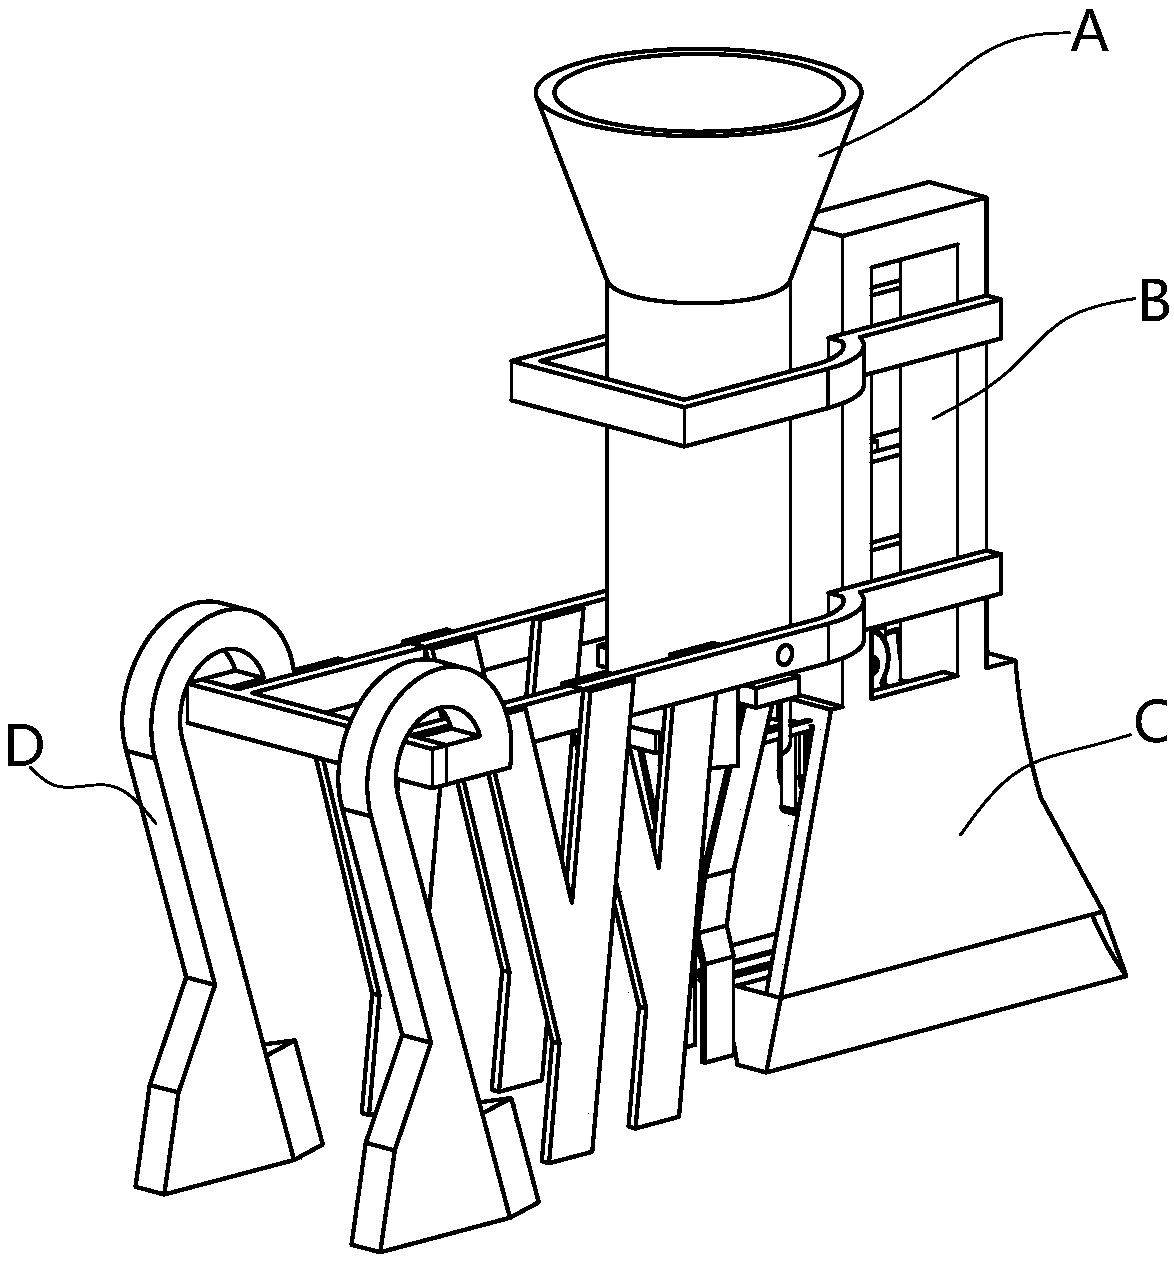 Control method of rotary push type rape pot seedling transplanter